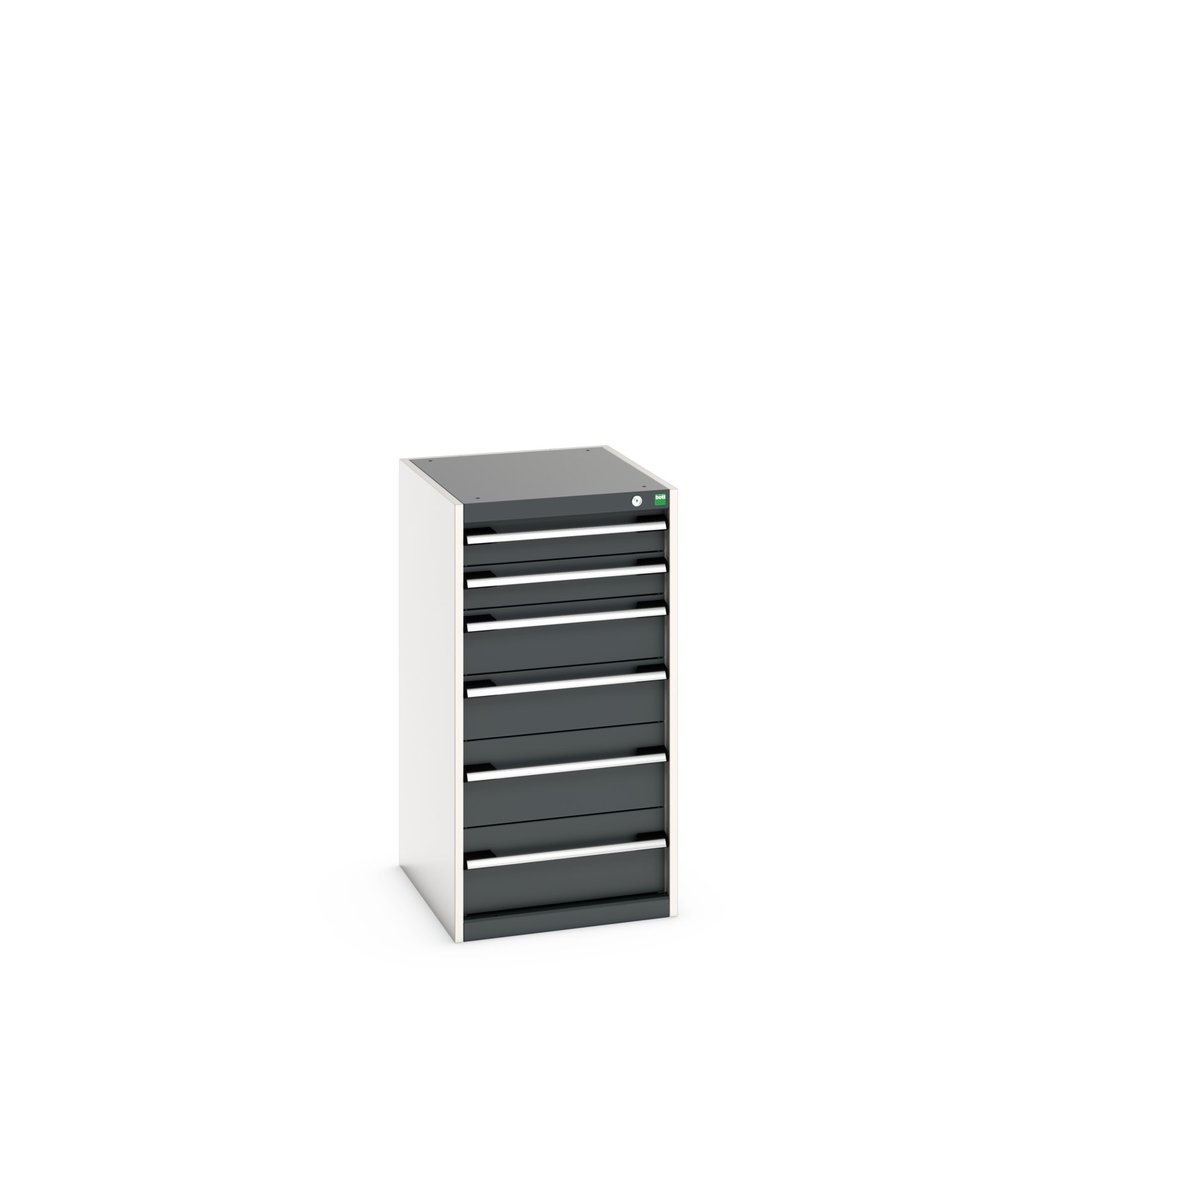 40018059. - cubio drawer cabinet